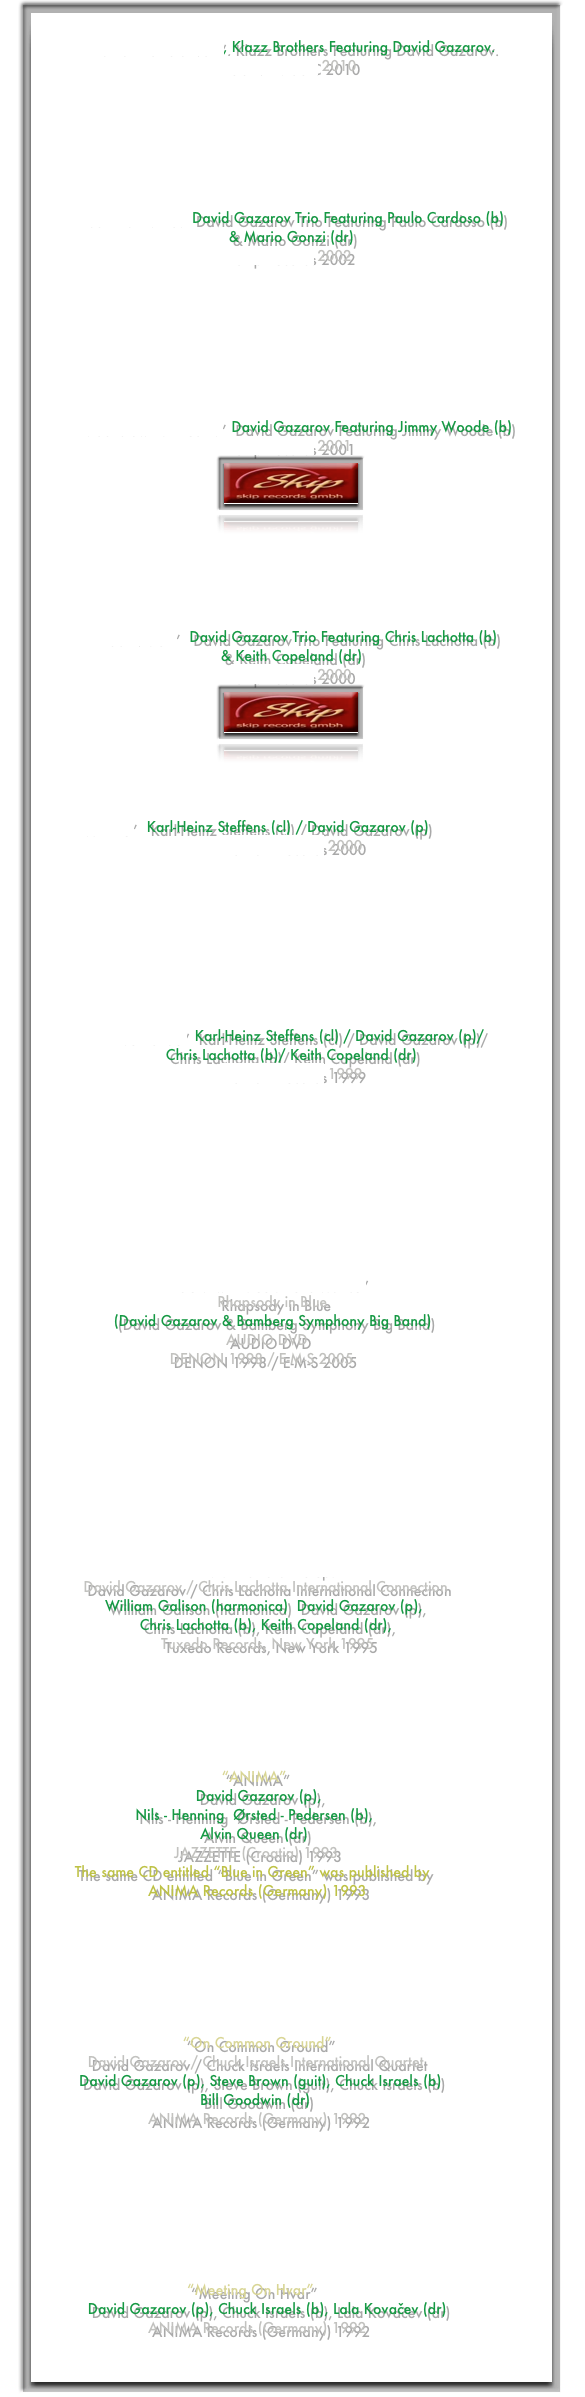 
“CHOPIN LOUNGE”, Klazz Brothers Featuring David Gazarov.
SONY MUSIC 2010







“Jazz Christmas” David Gazarov Trio Featuring Paulo Cardoso (b) 
& Mario Gonzi (dr)
Skip Records 2002








“Mad Clown’s Dreams”  David Gazarov Featuring Jimmy Woode (b)
Skip Records 2001
￼






“Black Vision”   David Gazarov Trio Featuring Chris Lachotta (b) 
& Keith Copeland (dr)
Skip Records 2000
￼



      
       “Lush Life”   Karl-Heinz Steffens (cl) / David Gazarov (p)
TUDOR Records 2000









“Blue Rondo”  Karl-Heinz Steffens (cl) / David Gazarov (p)/
Chris Lachotta (b)/ Keith Copeland (dr)
TUDOR Records 1999










                              “Gershwin Meets Renaissance”   
                                          Rhapsody in Blue 
                  (David Gazarov & Bamberg Symphony Big Band) 
                                            AUDIO DVD
                               DENON 1998 / E-M-S 2005


                             







                                   “Autumnal Giant Steps”  
           David Gazarov / Chris Lachotta International Connection
                William Galison (harmonica)  David Gazarov (p), 
                        Chris Lachotta (b), Keith Copeland (dr),
                             Tuxedo Records, New York 1995
            
           




                                           “ANIMA”
                                     David Gazarov (p), 
                       Nils - Henning  Ørsted - Pedersen (b),
                                      Alvin Queen (dr)
                                JAZZETTE (Croatia) 1993
         The same CD entitled “Blue in Green” was published by
                          ANIMA Records (Germany) 1993







                                  “On Common Ground”
            David Gazarov / Chuck Israels International Quartet
          David Gazarov (p), Steve Brown (guit), Chuck Israels (b)
                                      Bill Goodwin (dr)
                          ANIMA Records (Germany) 1992







          
                                   “Meeting On Hvar”
            David Gazarov (p), Chuck Israels (b), Lala Kovačev (dr) 
                          ANIMA Records (Germany) 1992
